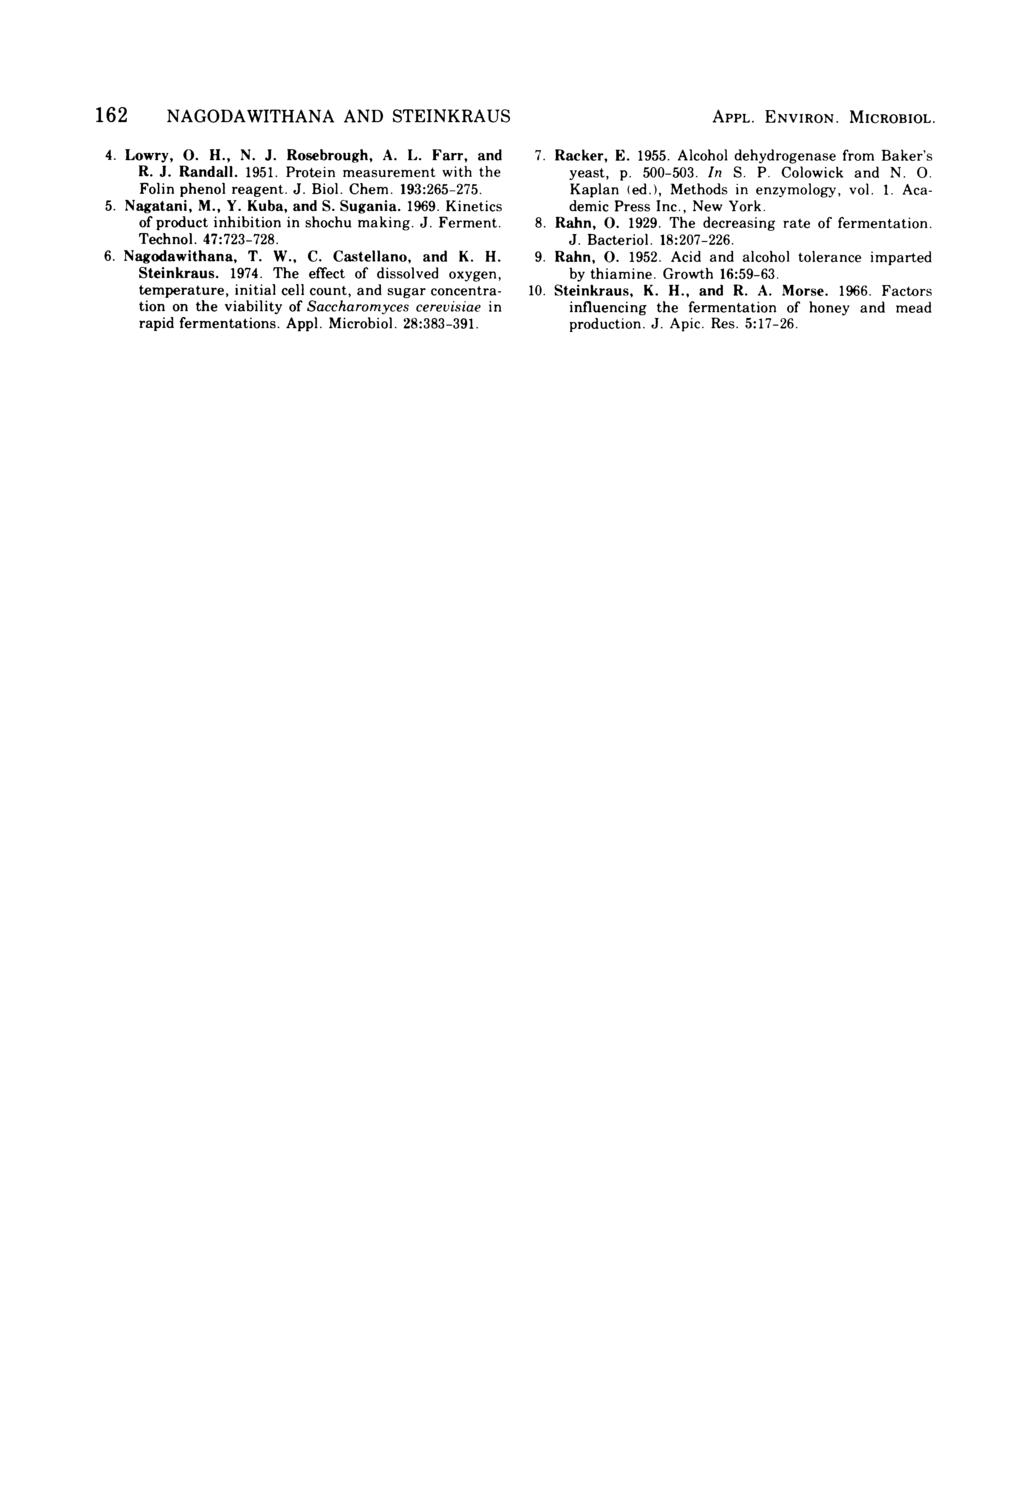 162 NAGODAWITHANA AND STEINKRAUS 4. Lowry, 0. H., N. J. Rosebrough, A. L. Farr, and R. J. Randall. 1951. Protein measurement with the Folin phenol reagent. J. Biol. Chem. 193:265-275. 5. Nagatani, M.